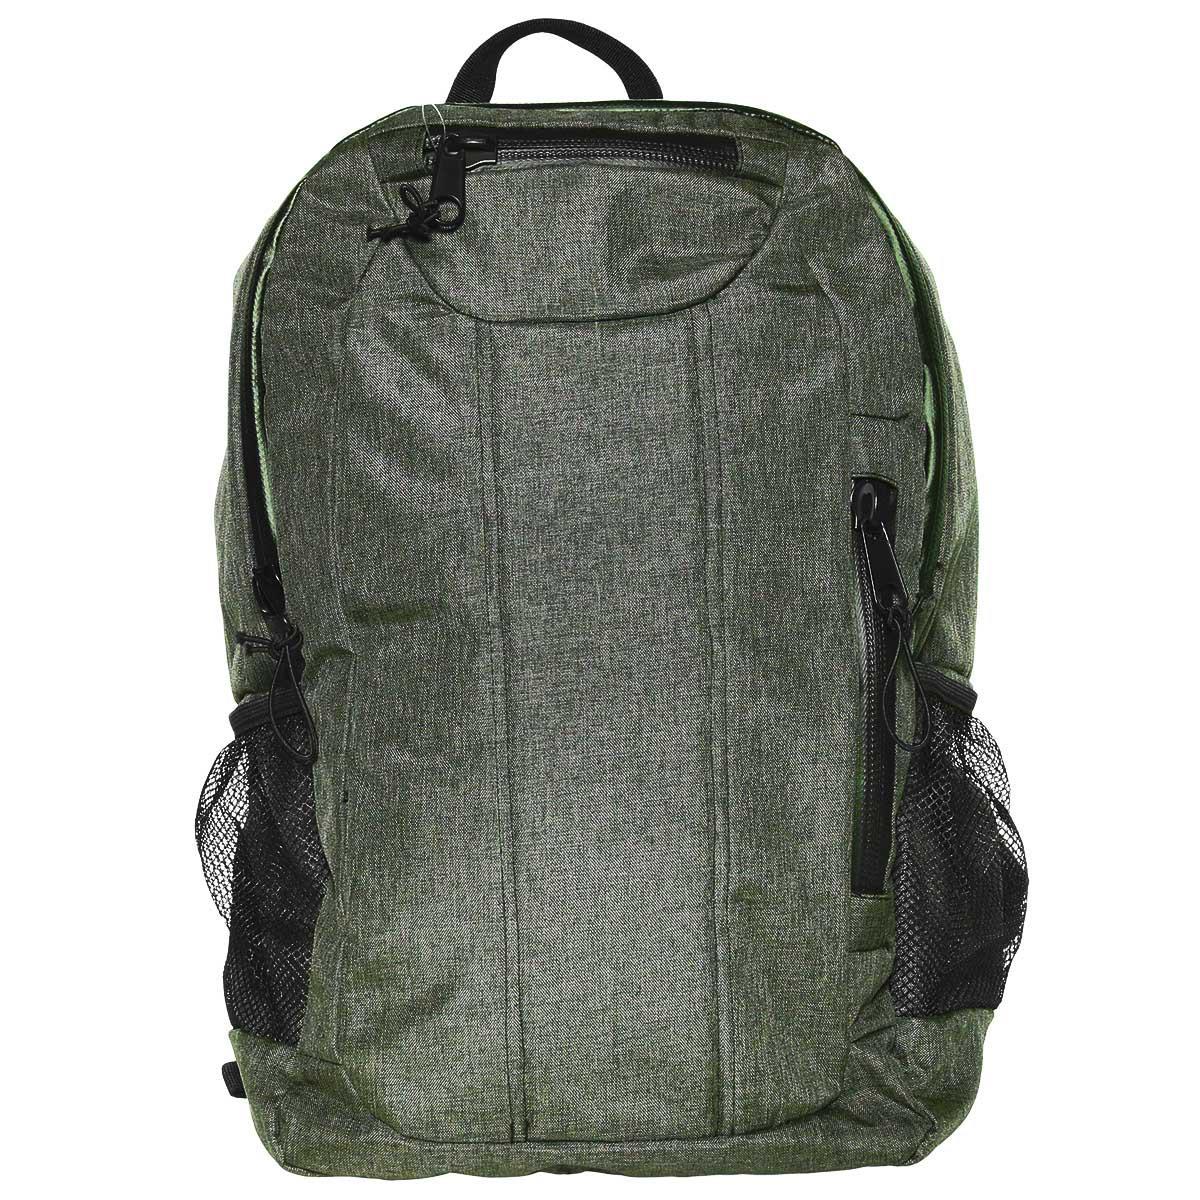 Odor proof backpack